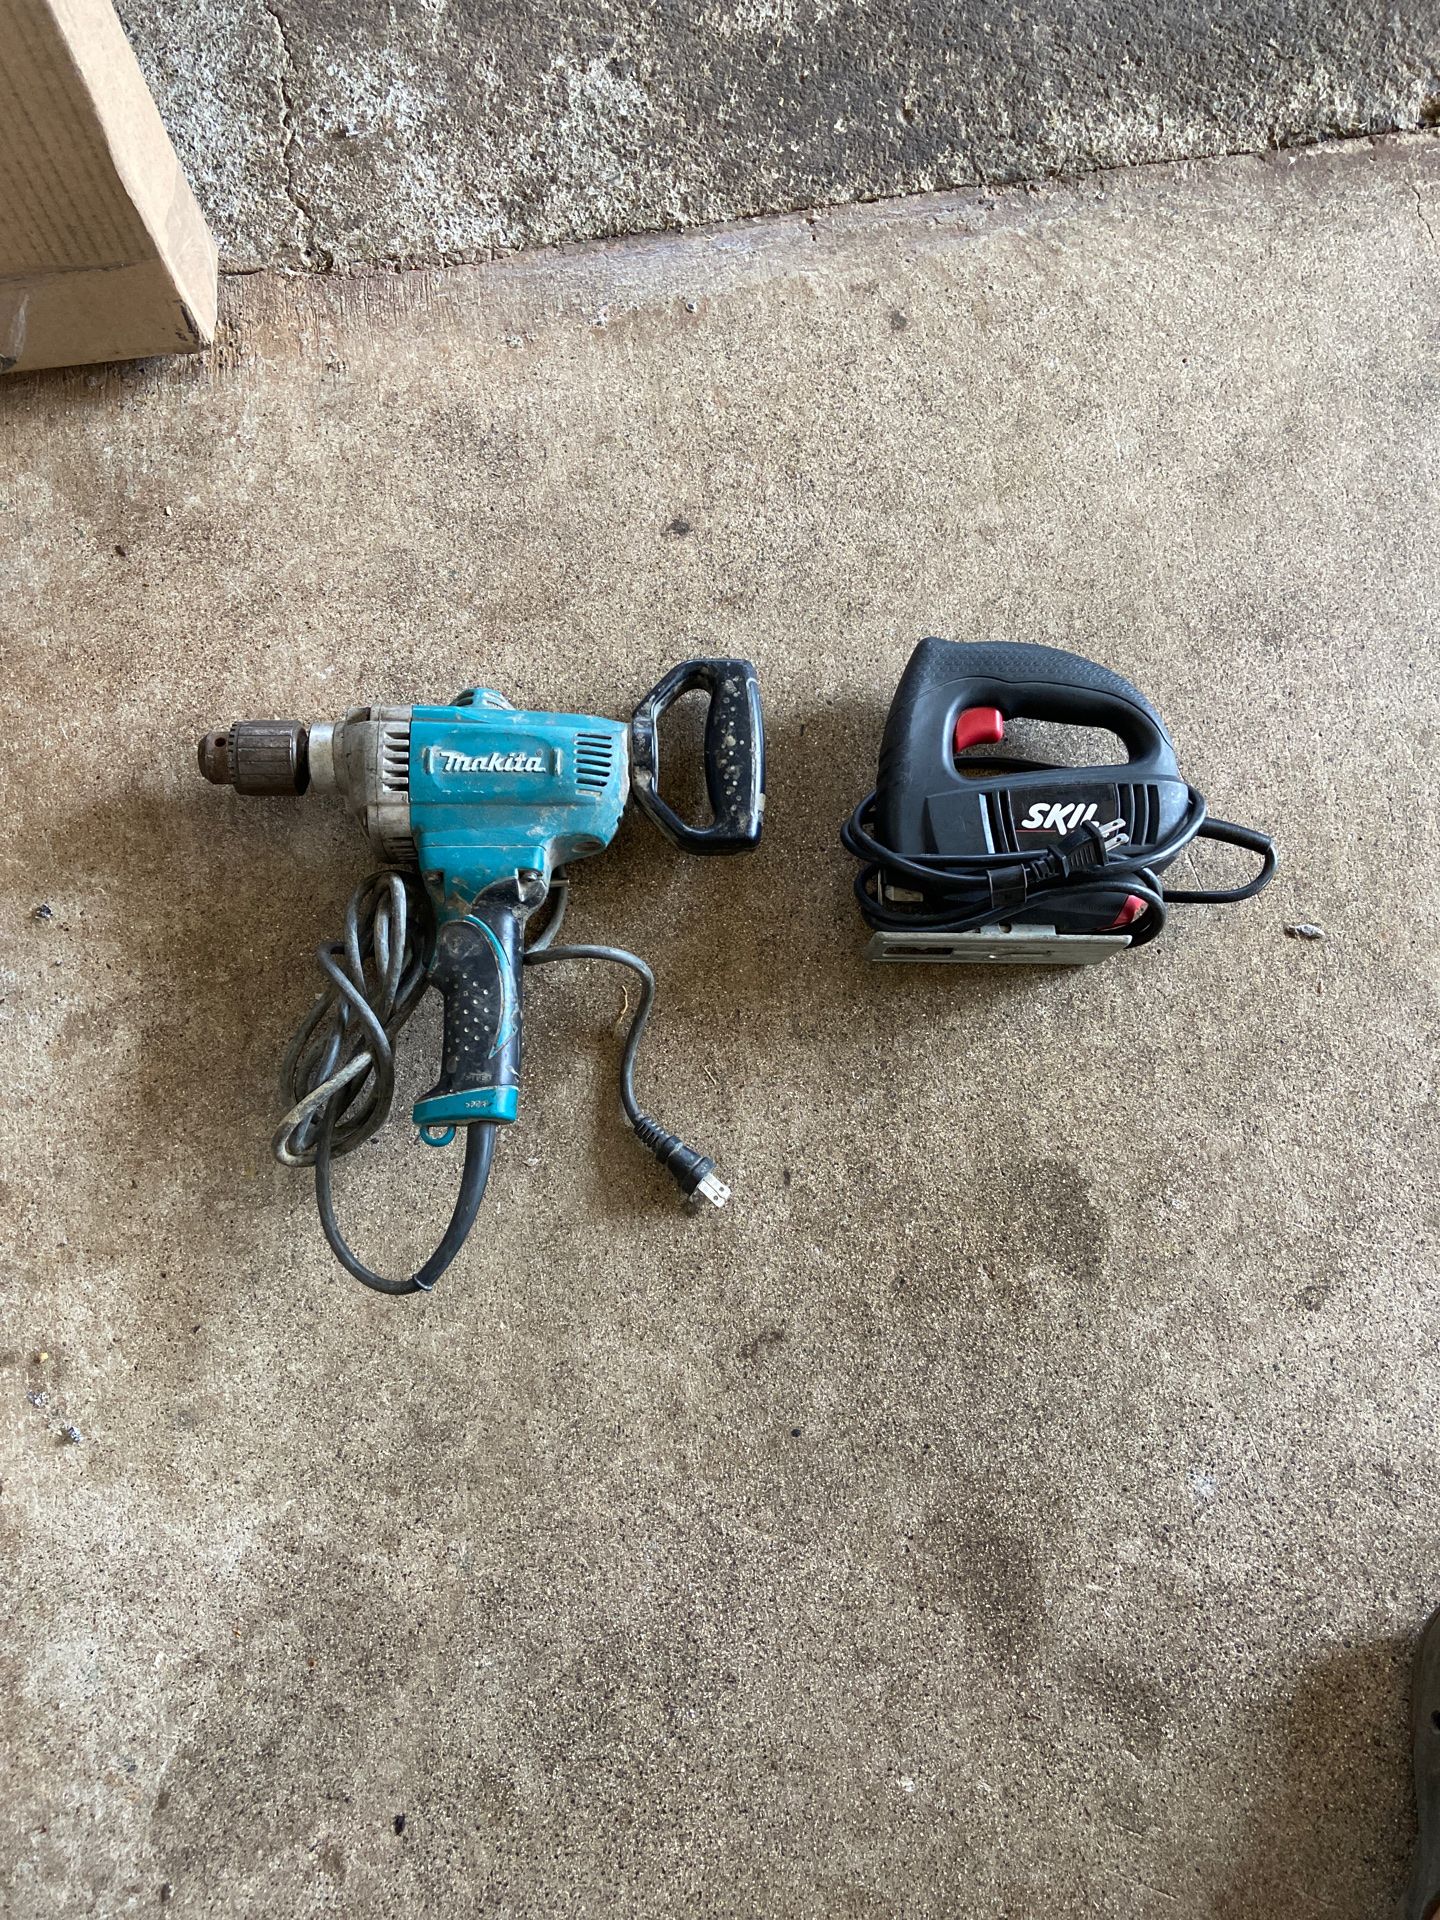 Makita 1/2” Spade handle drill and Skil jigsaw